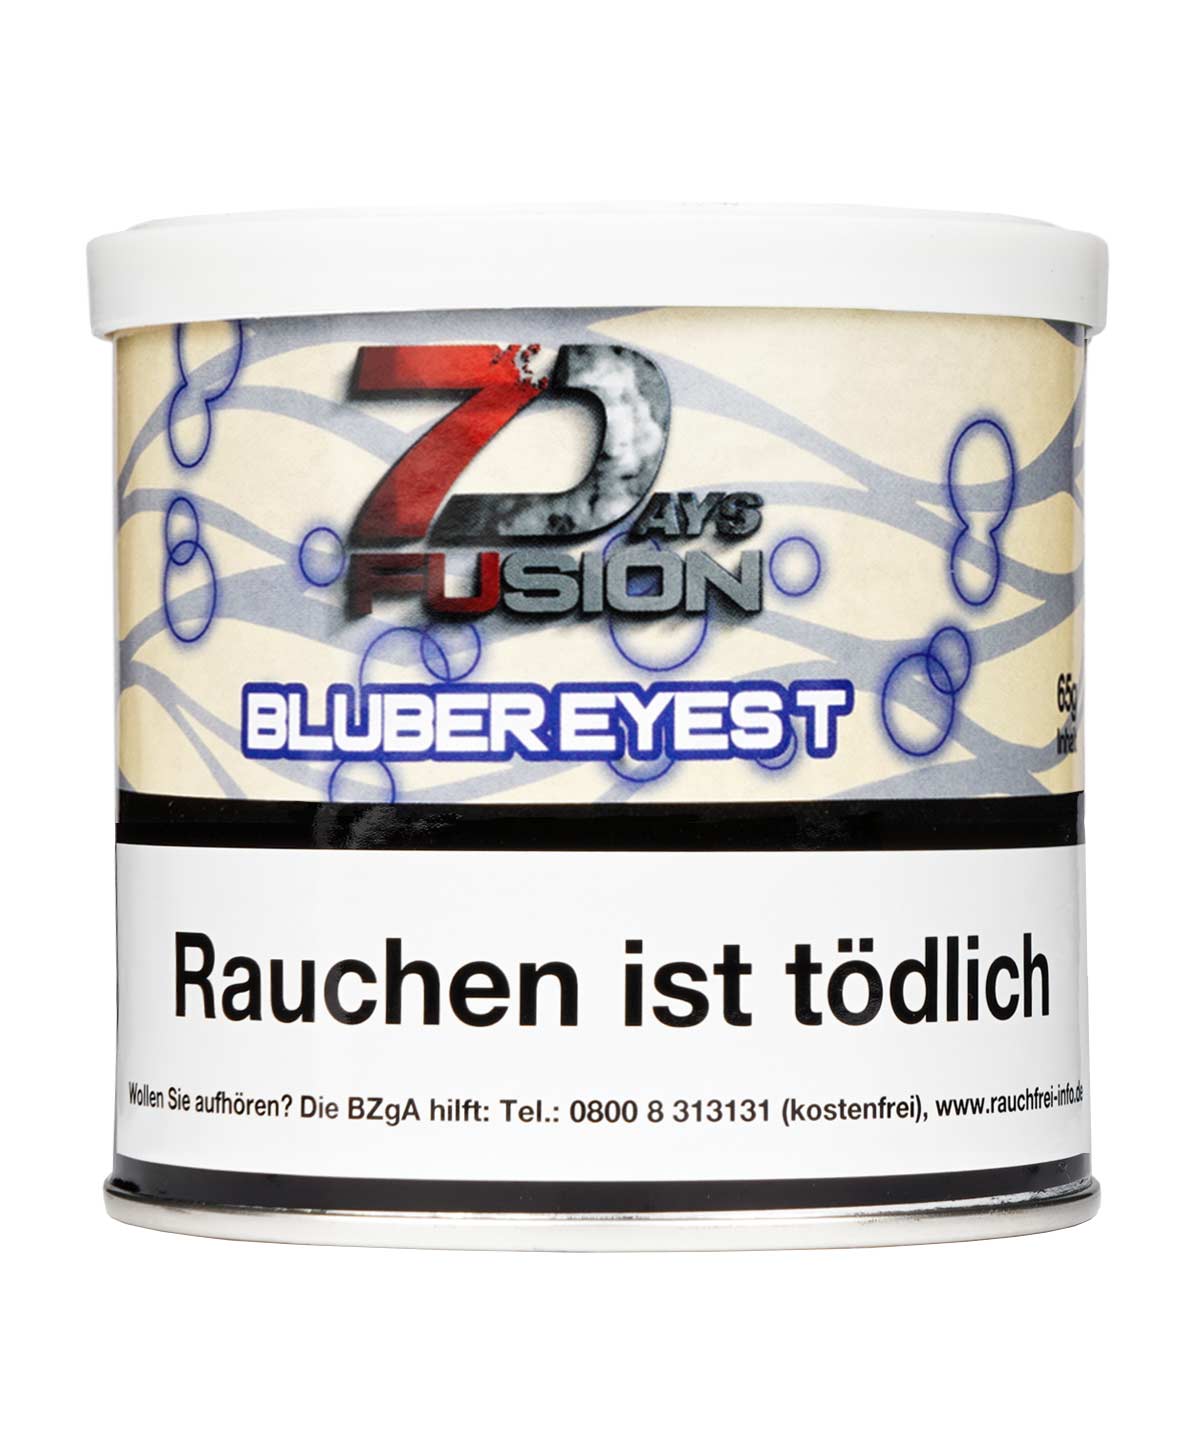 7 Days Fusion Pfeifentabak Bluber Eyes T 65g Pfeifentabak